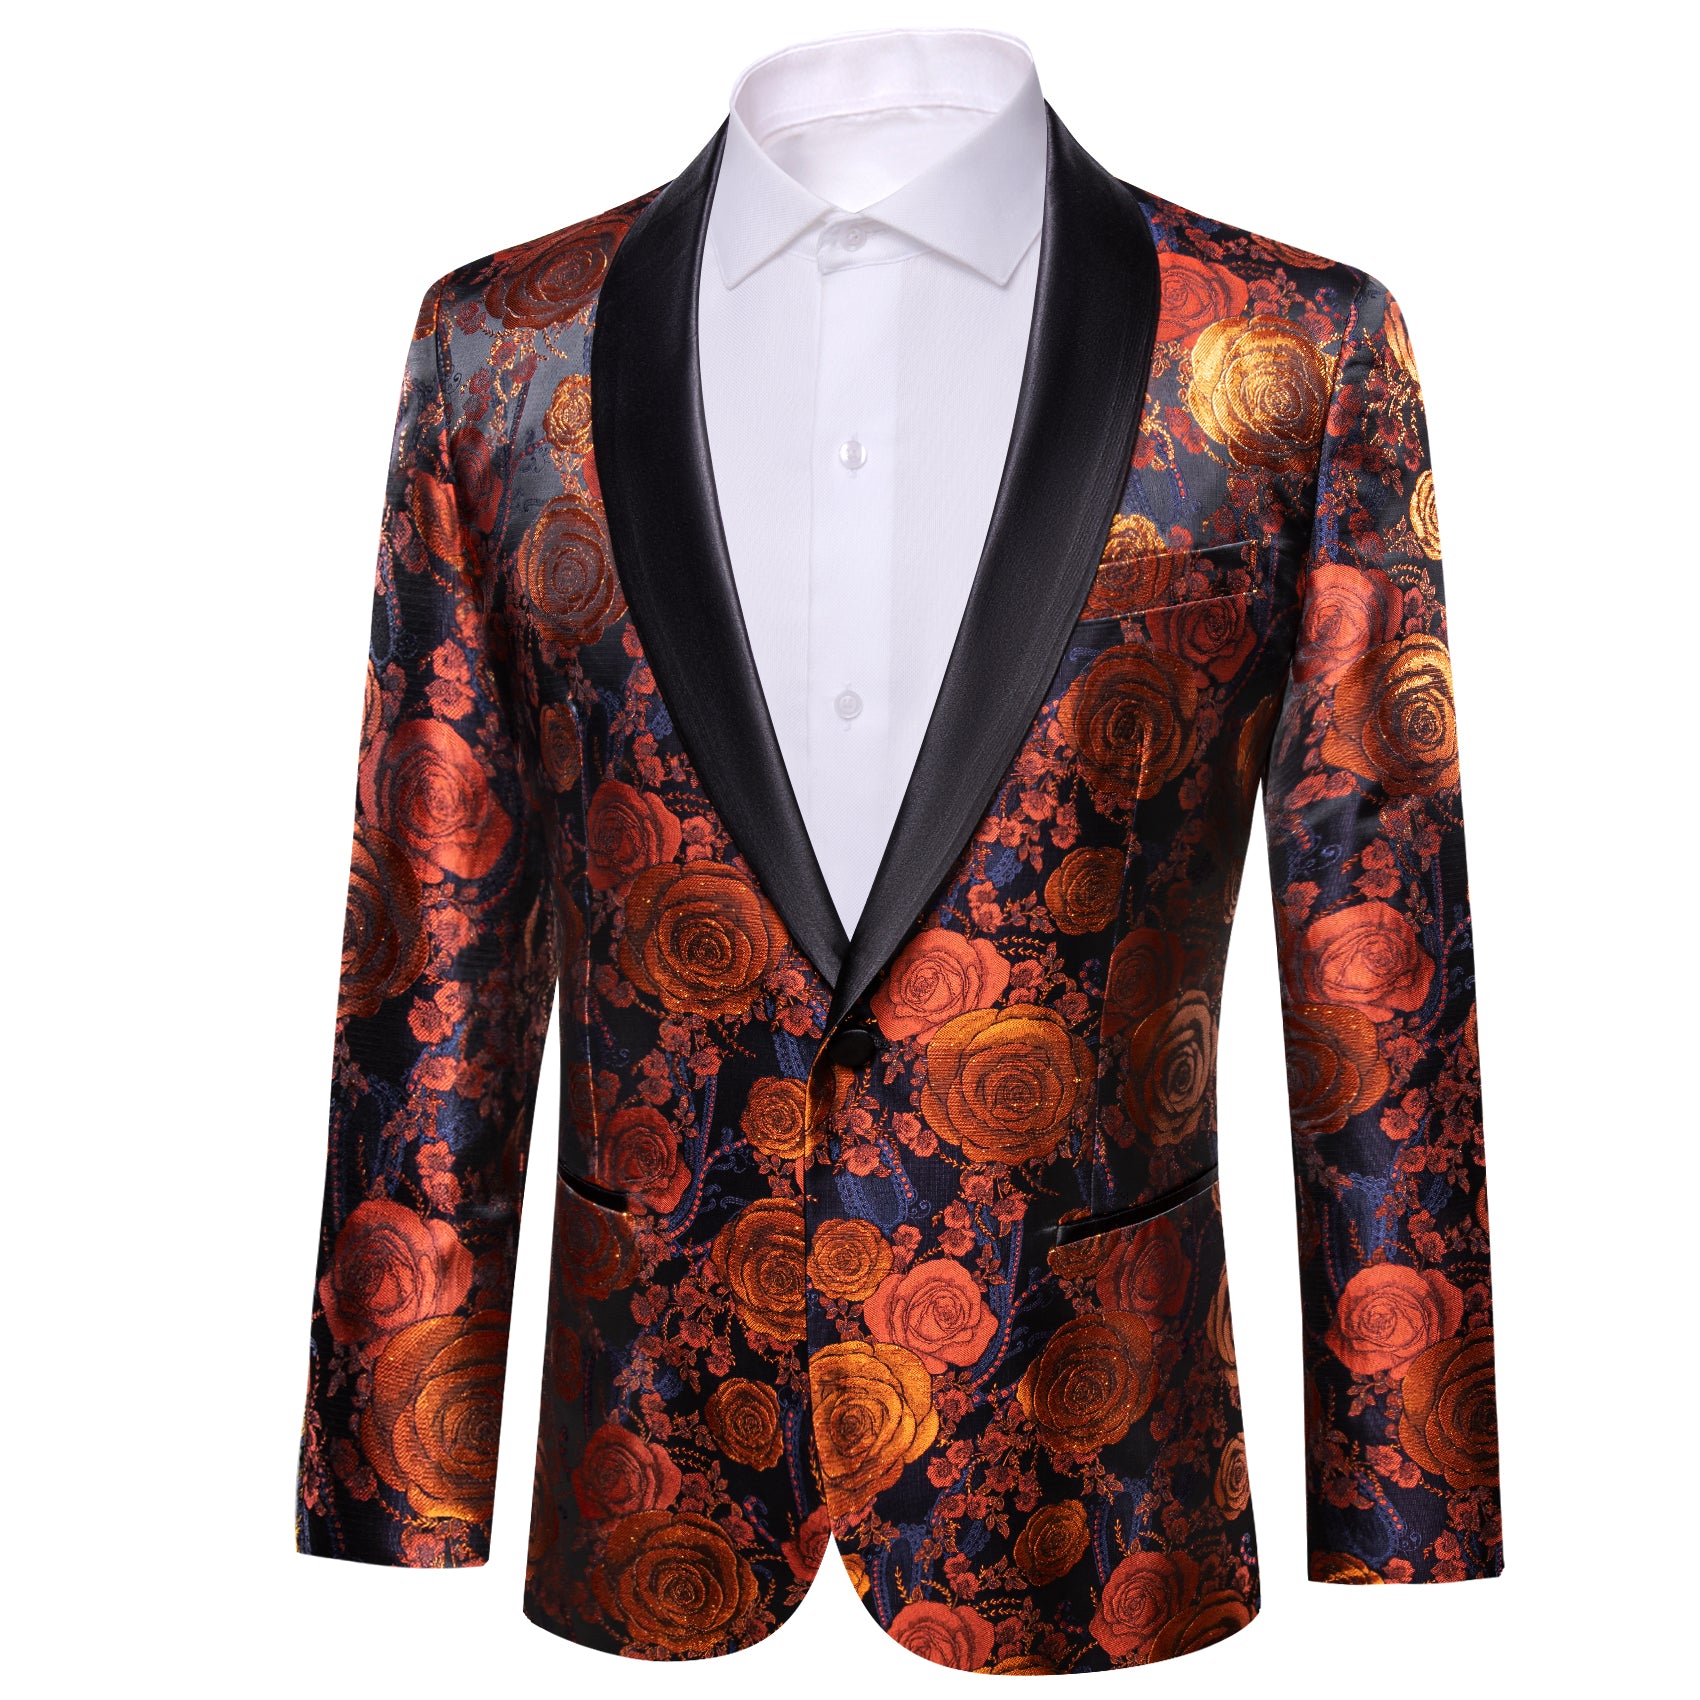 Barry.wang Shawl Collar Suit Orange Blue Flower Blazer Suit Jacket for Men